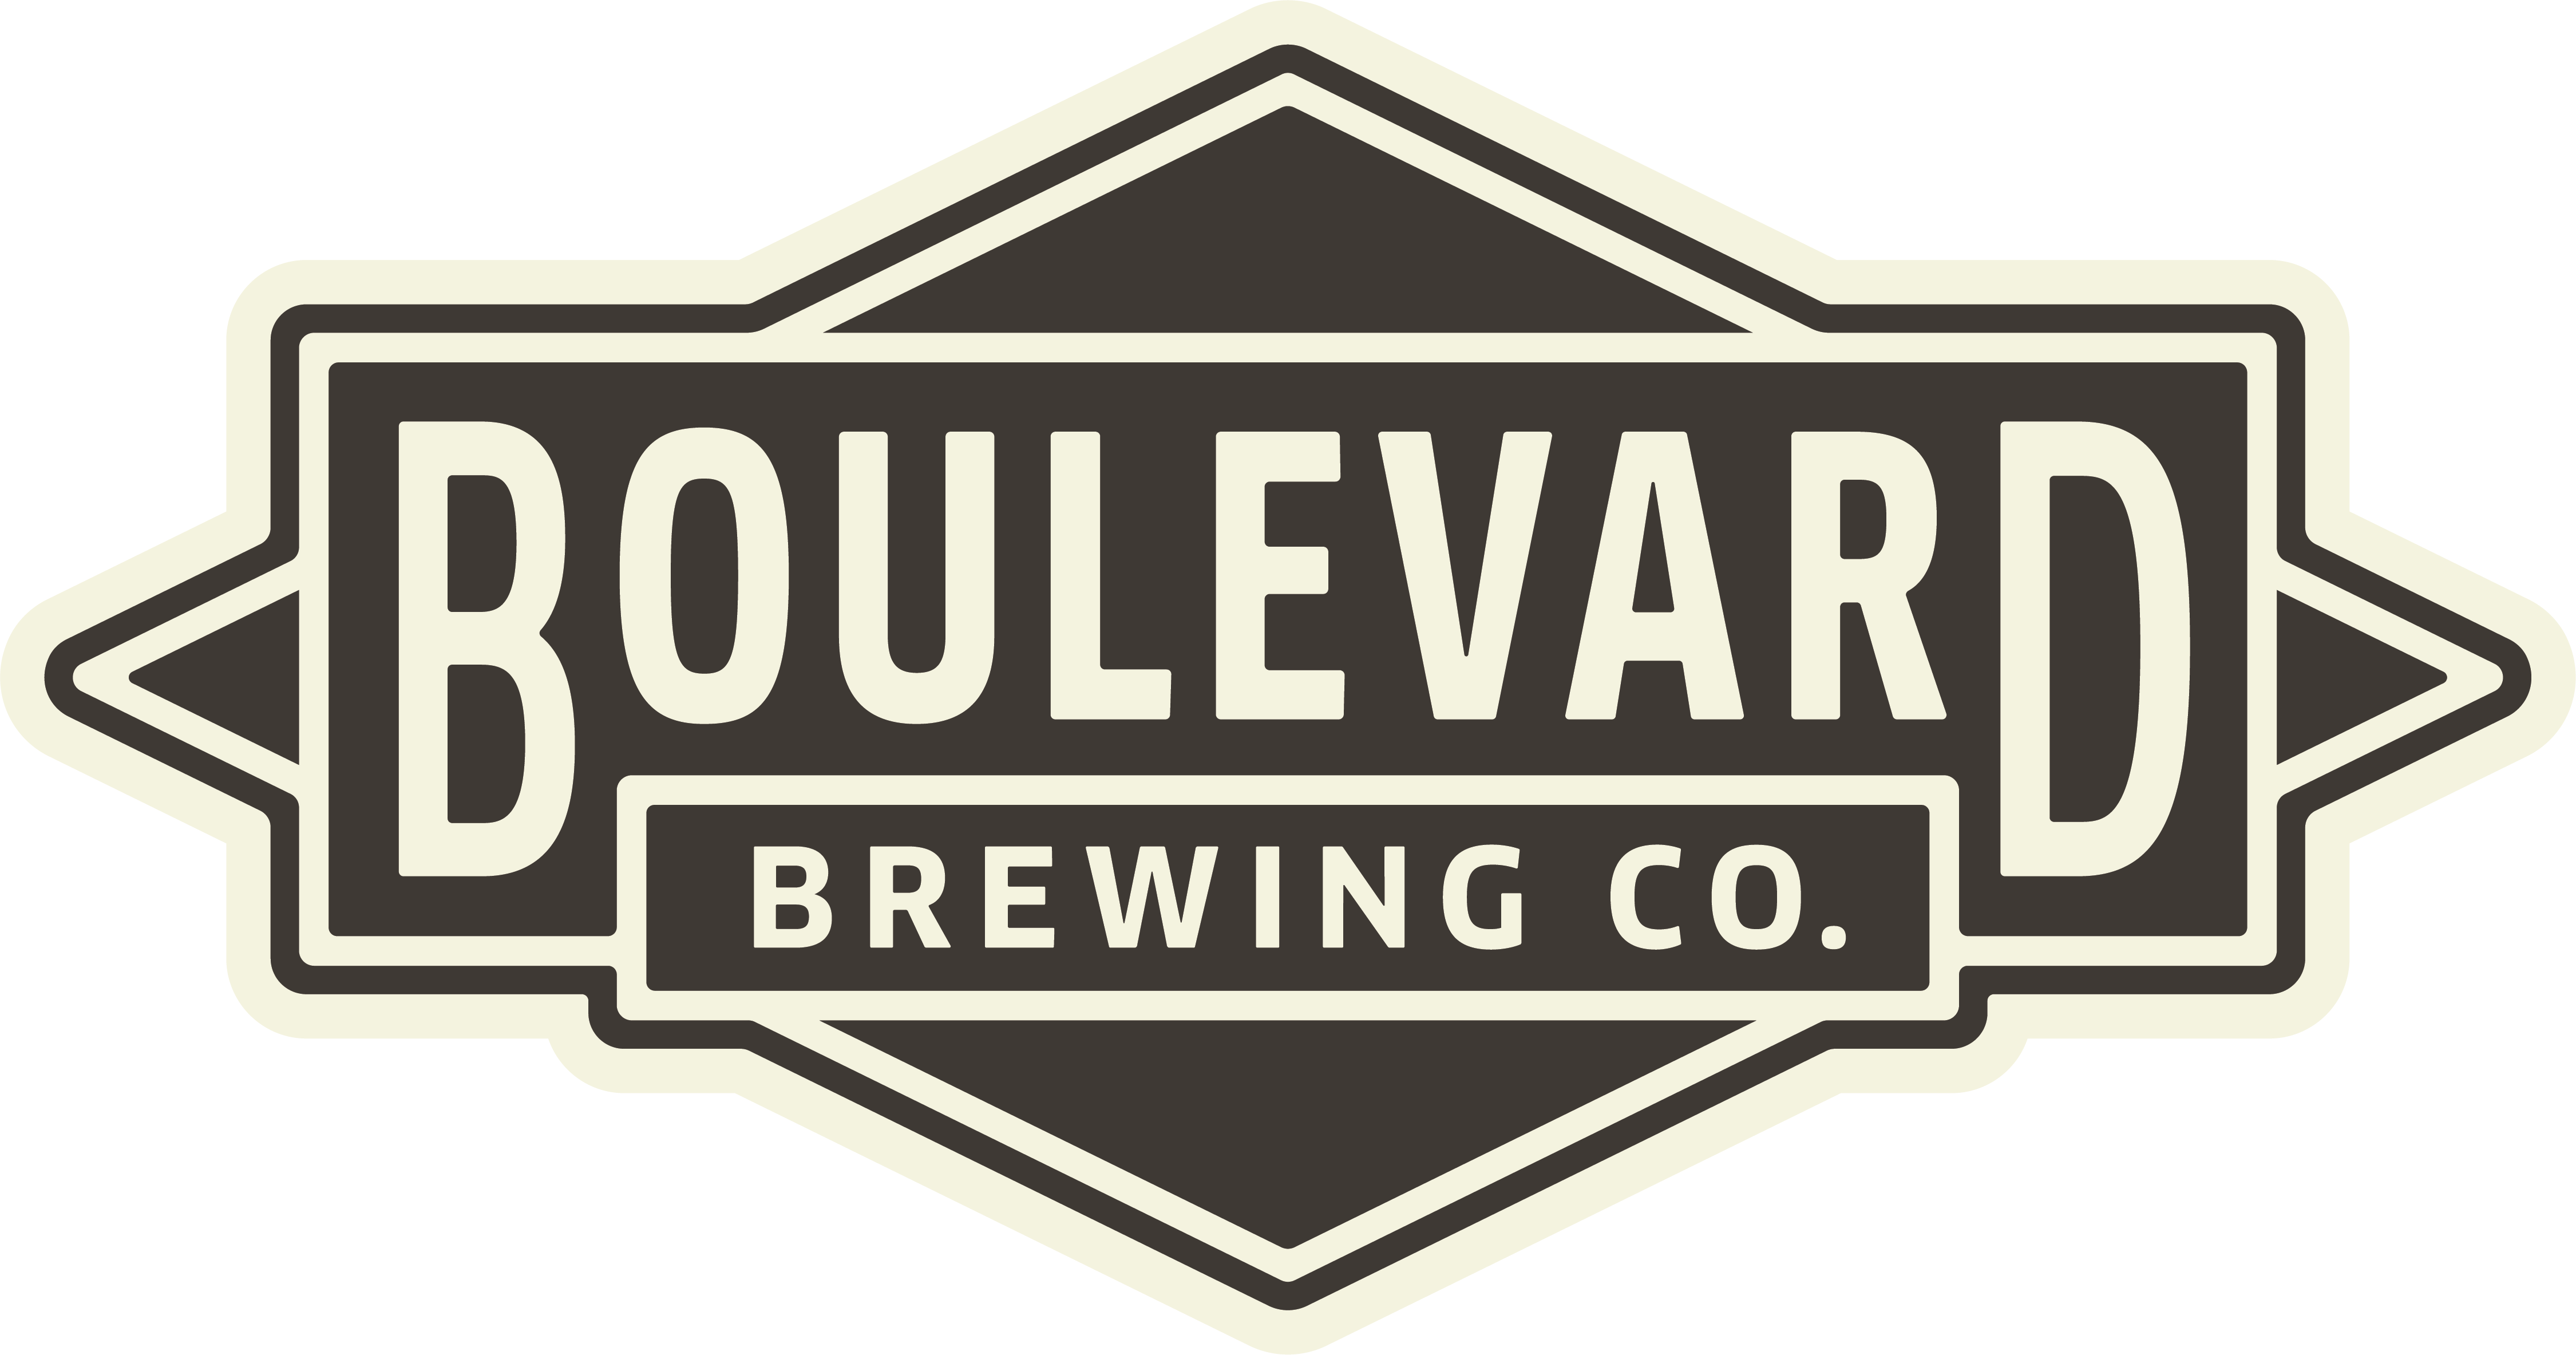 Boulevard Brewery